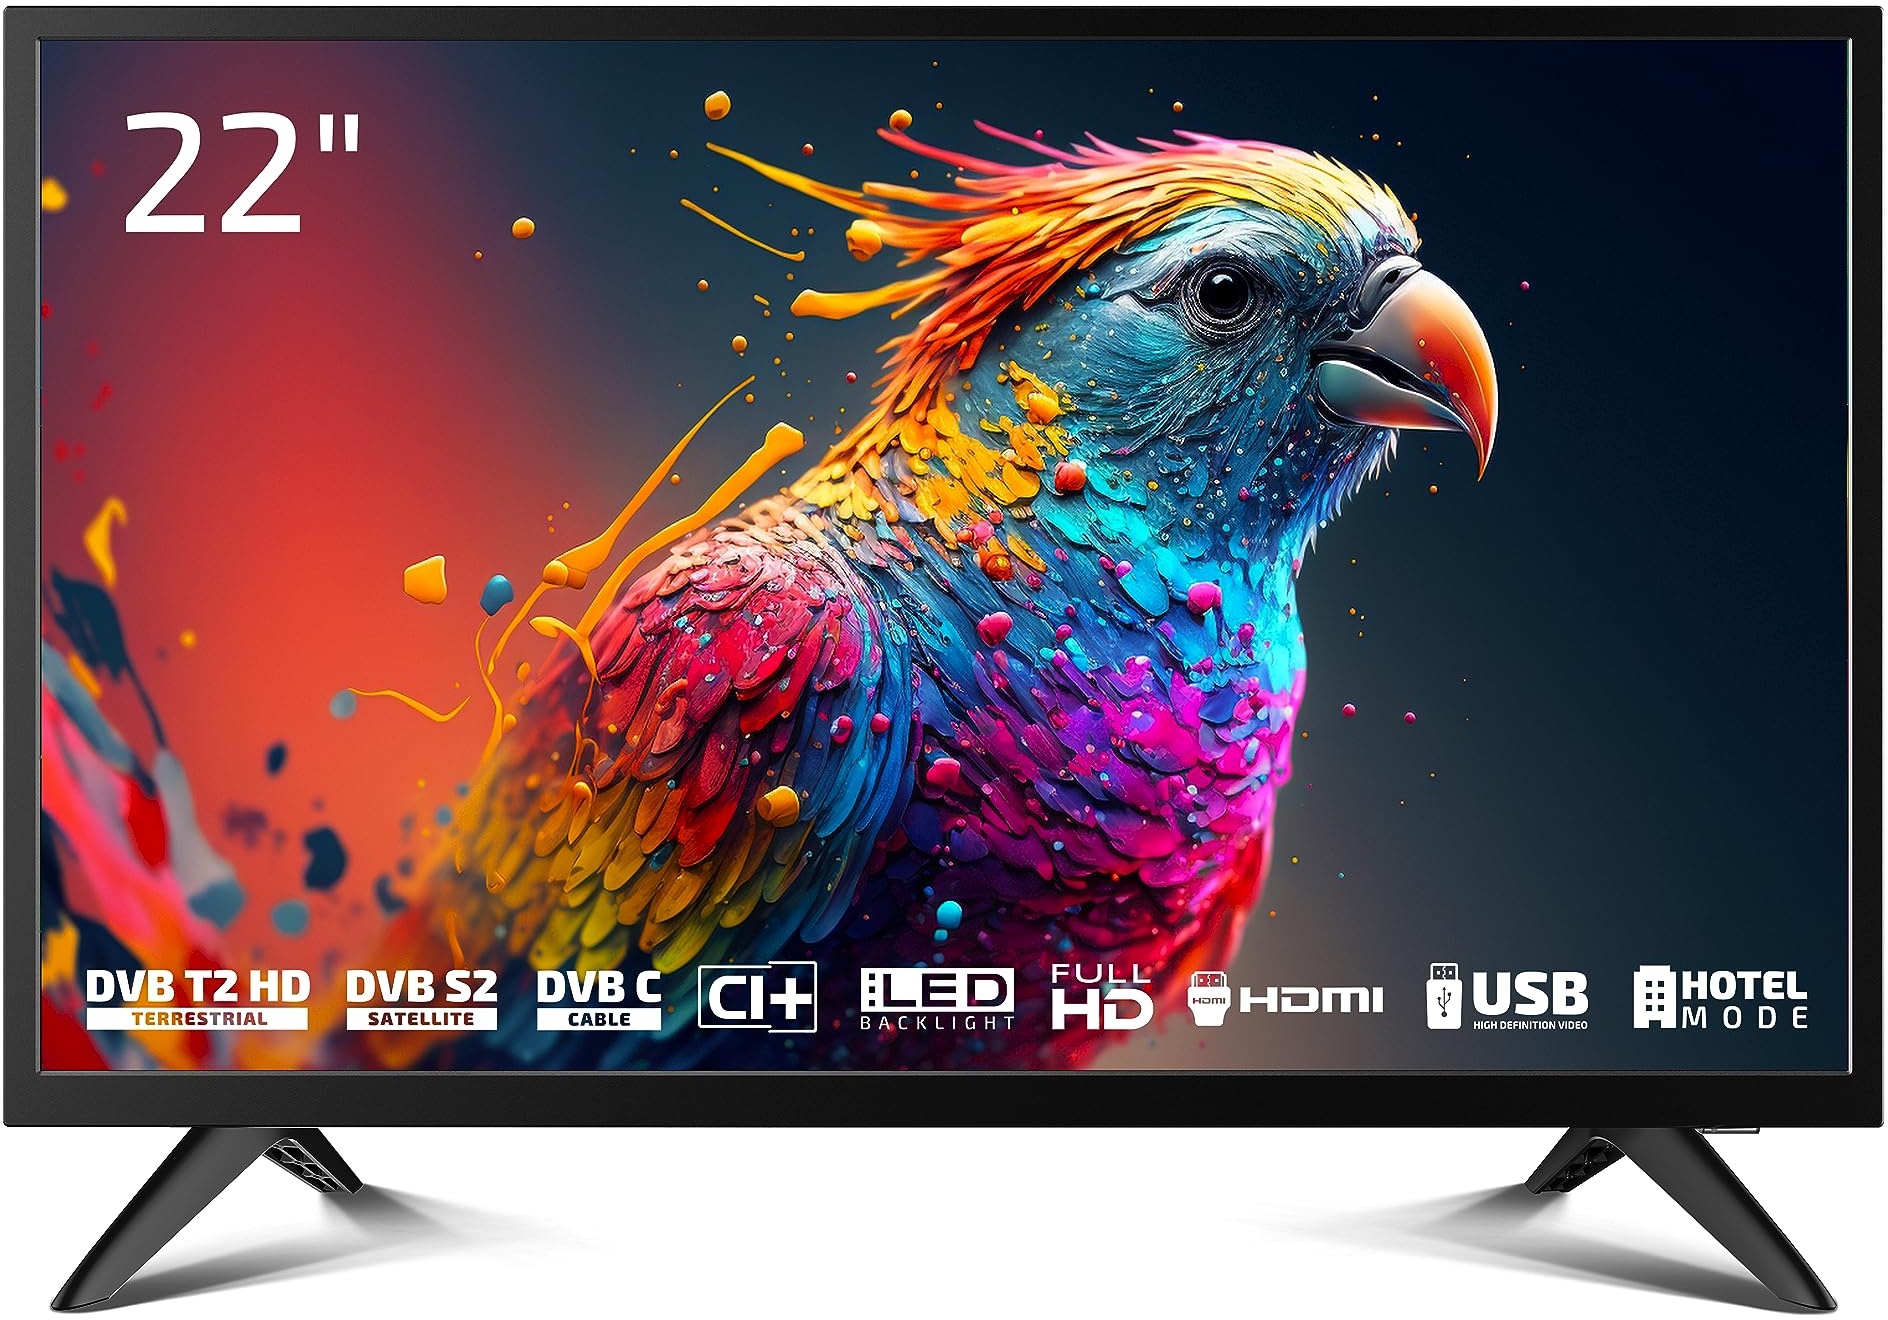 DYON Enter 22 Pro X2 55 cm (22 Zoll) Full-HD Fernseher (Triple Tuner (DVB-C/-S2/-T2), Hotelmodus, USB-Media Player) [Modelljahr 2023], Schwarz